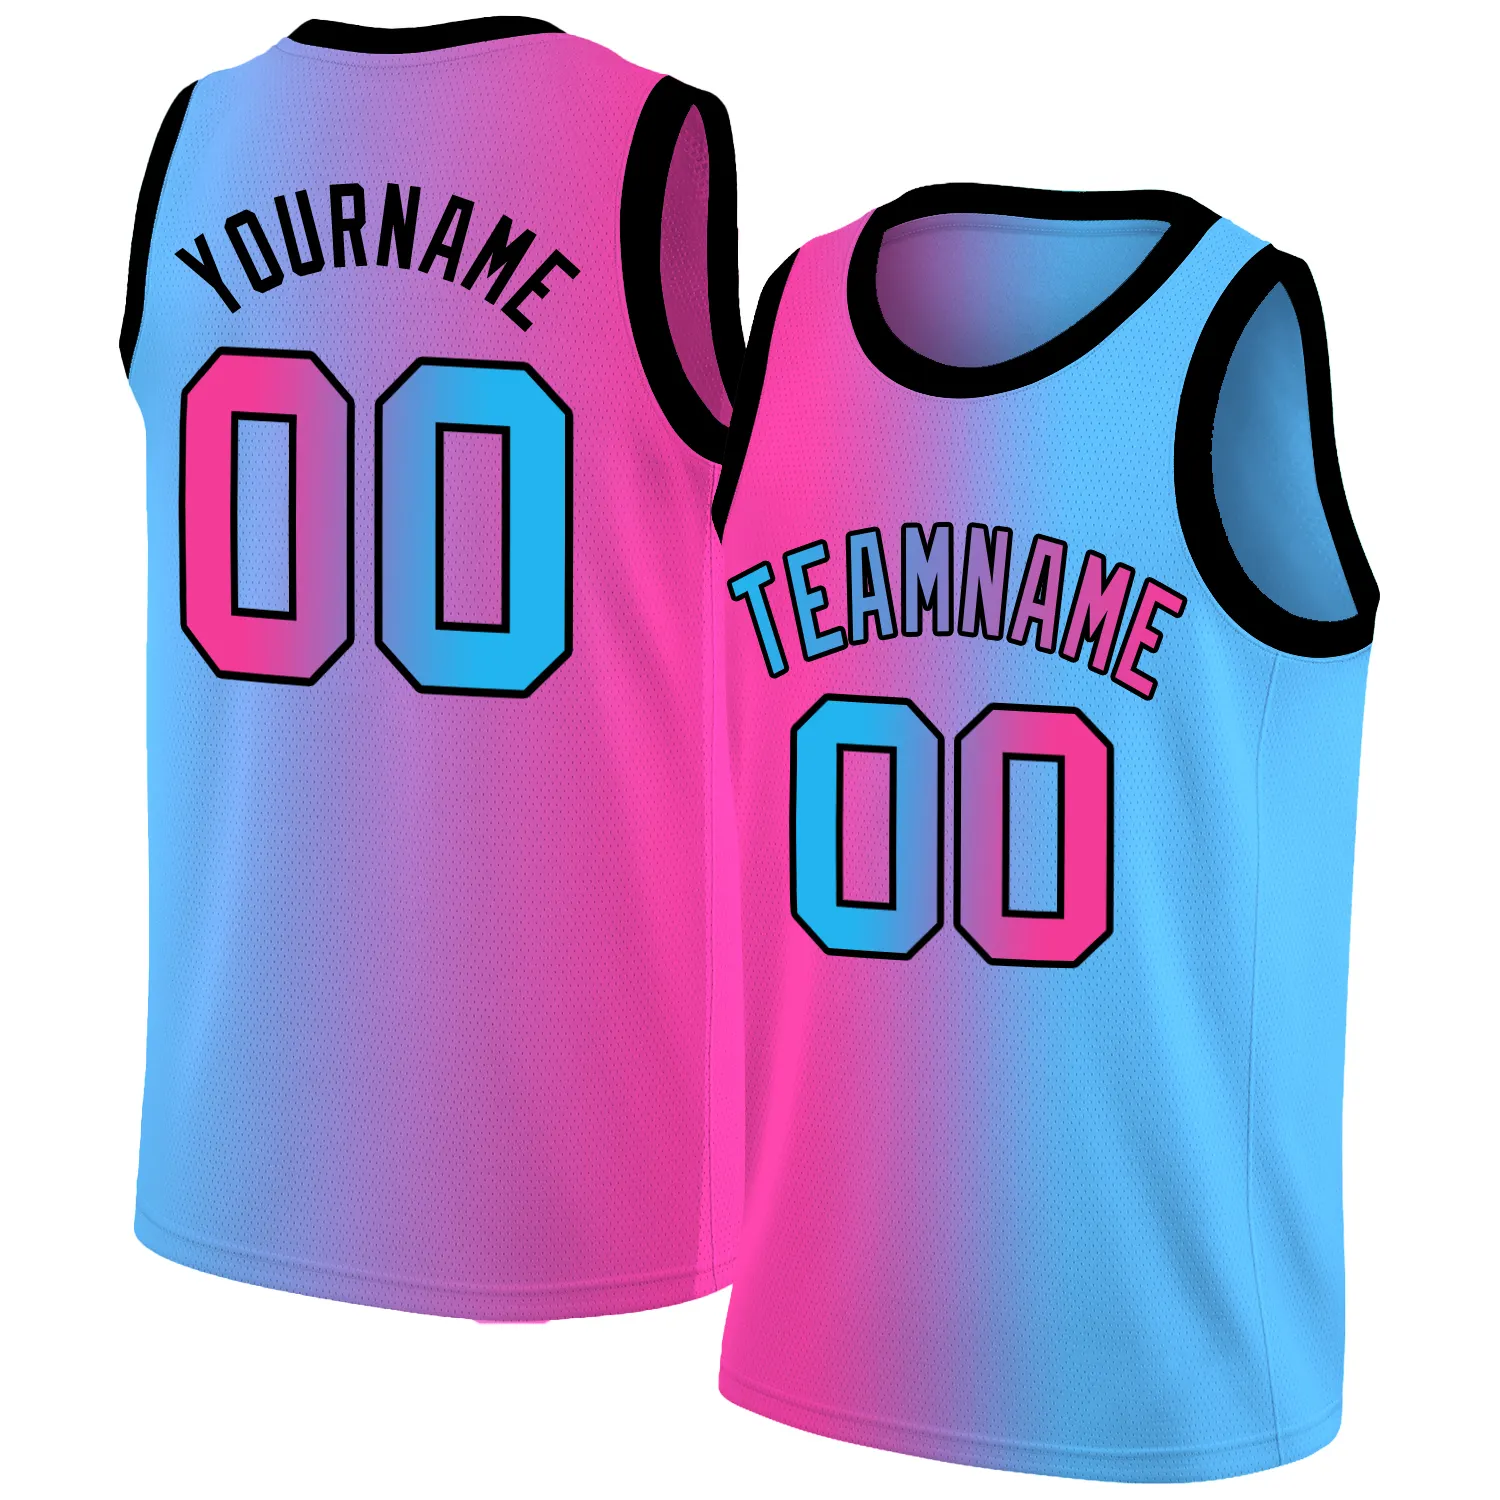 Oem Custom Design Logo Basketball Wear Sublimation Basketball Jersey Uniform Team Club Number Stitched Basketball Set